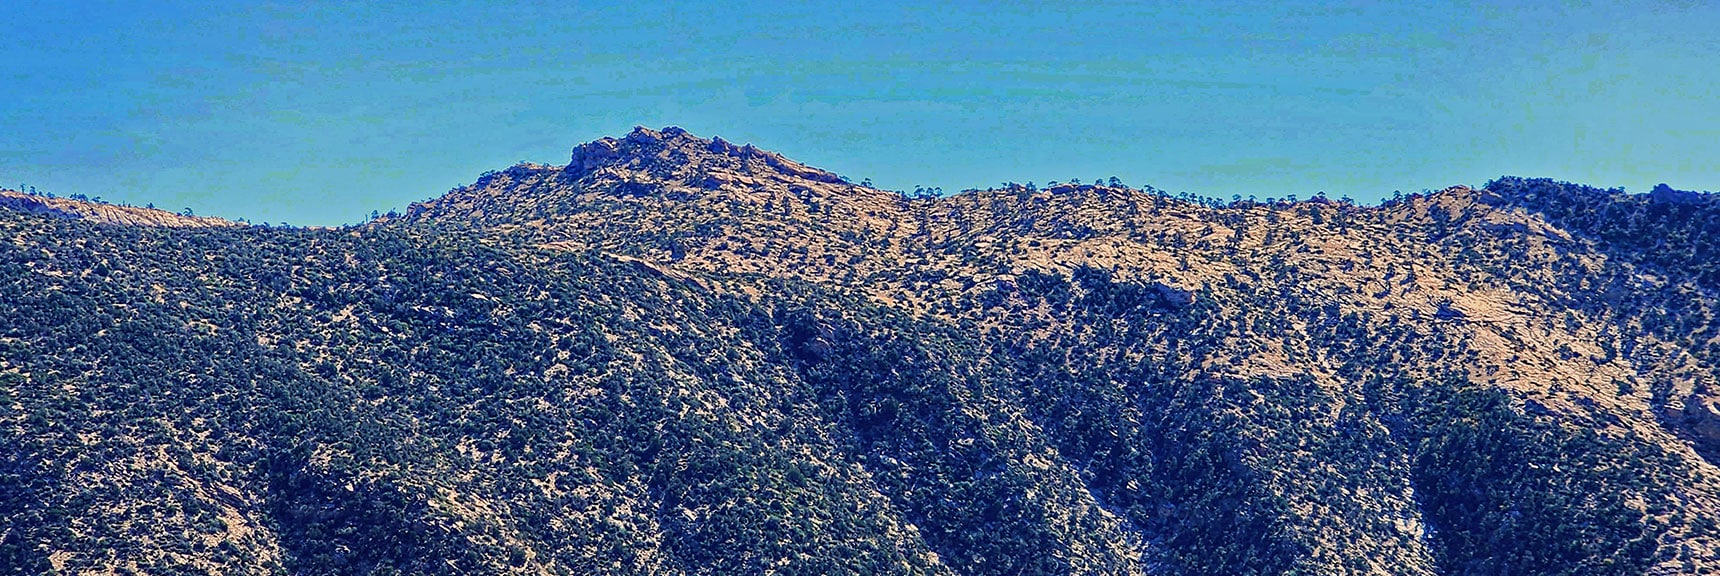 Beautiful Red Rock Plateau Above Buffalo Wall. | Switchback Spring Ridge | Red Rock Canyon, Nevada